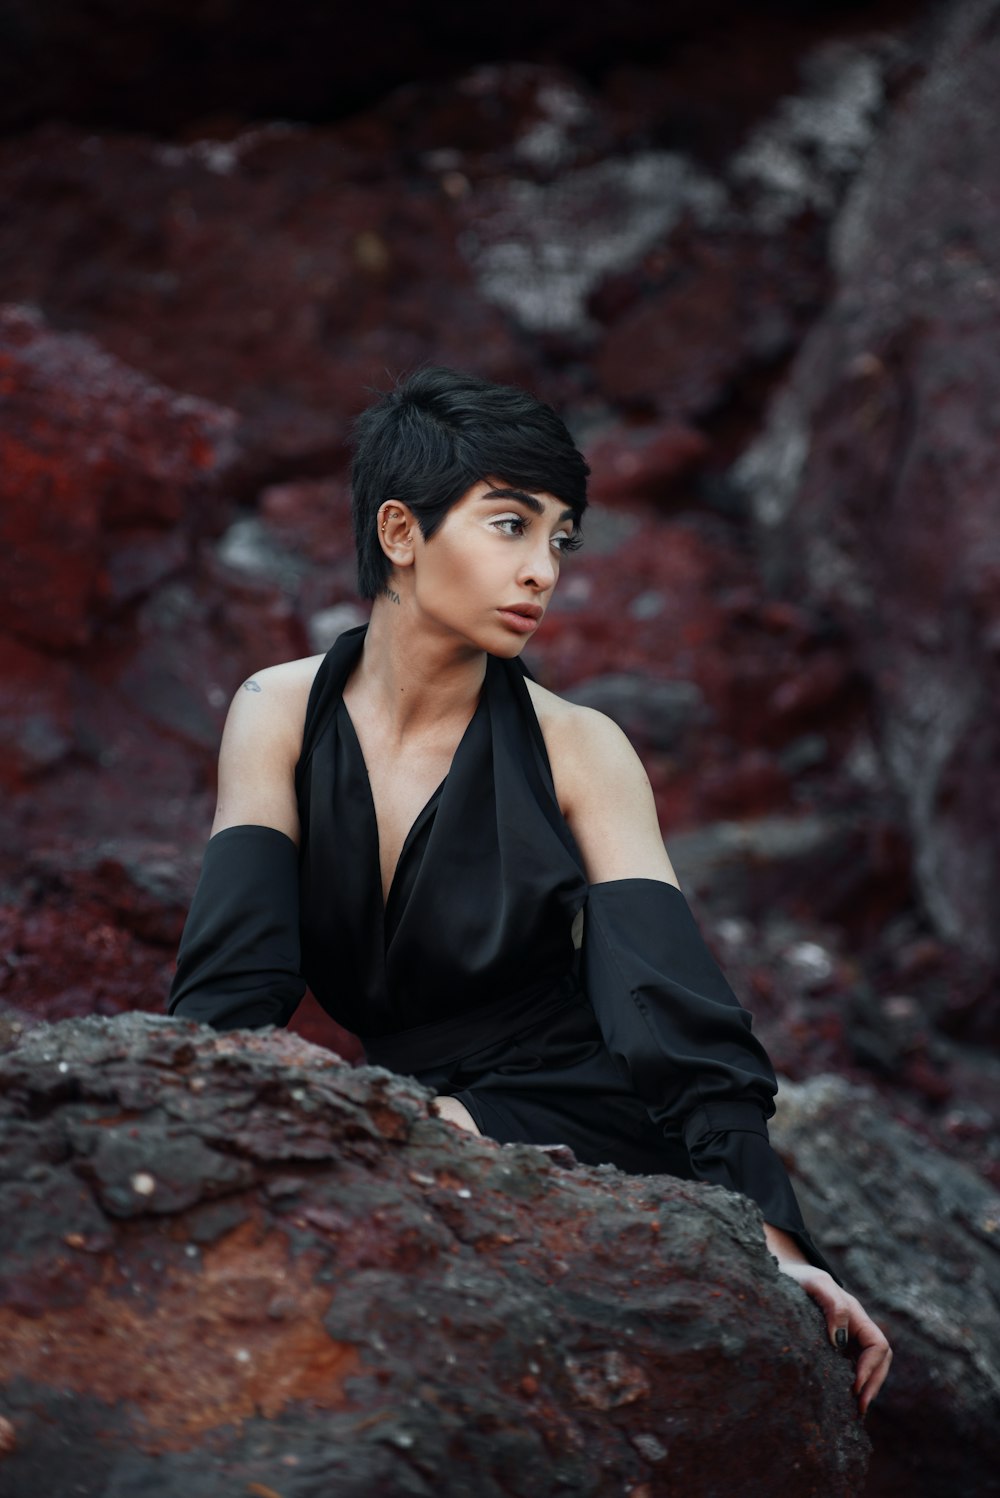 a woman in a black dress sitting on a rock